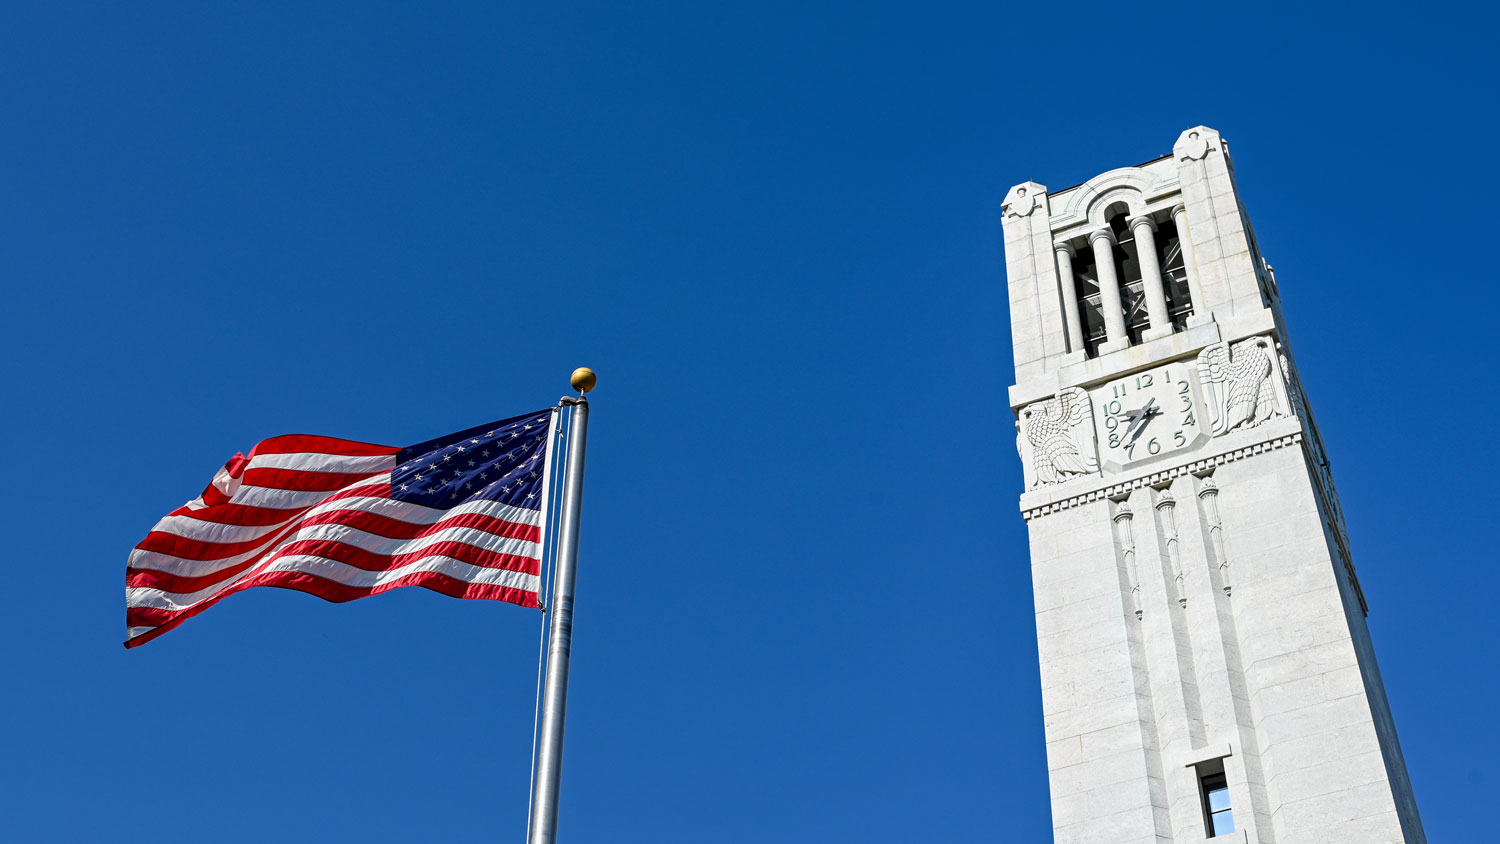 The American flag flies next to the Memorial Belltower